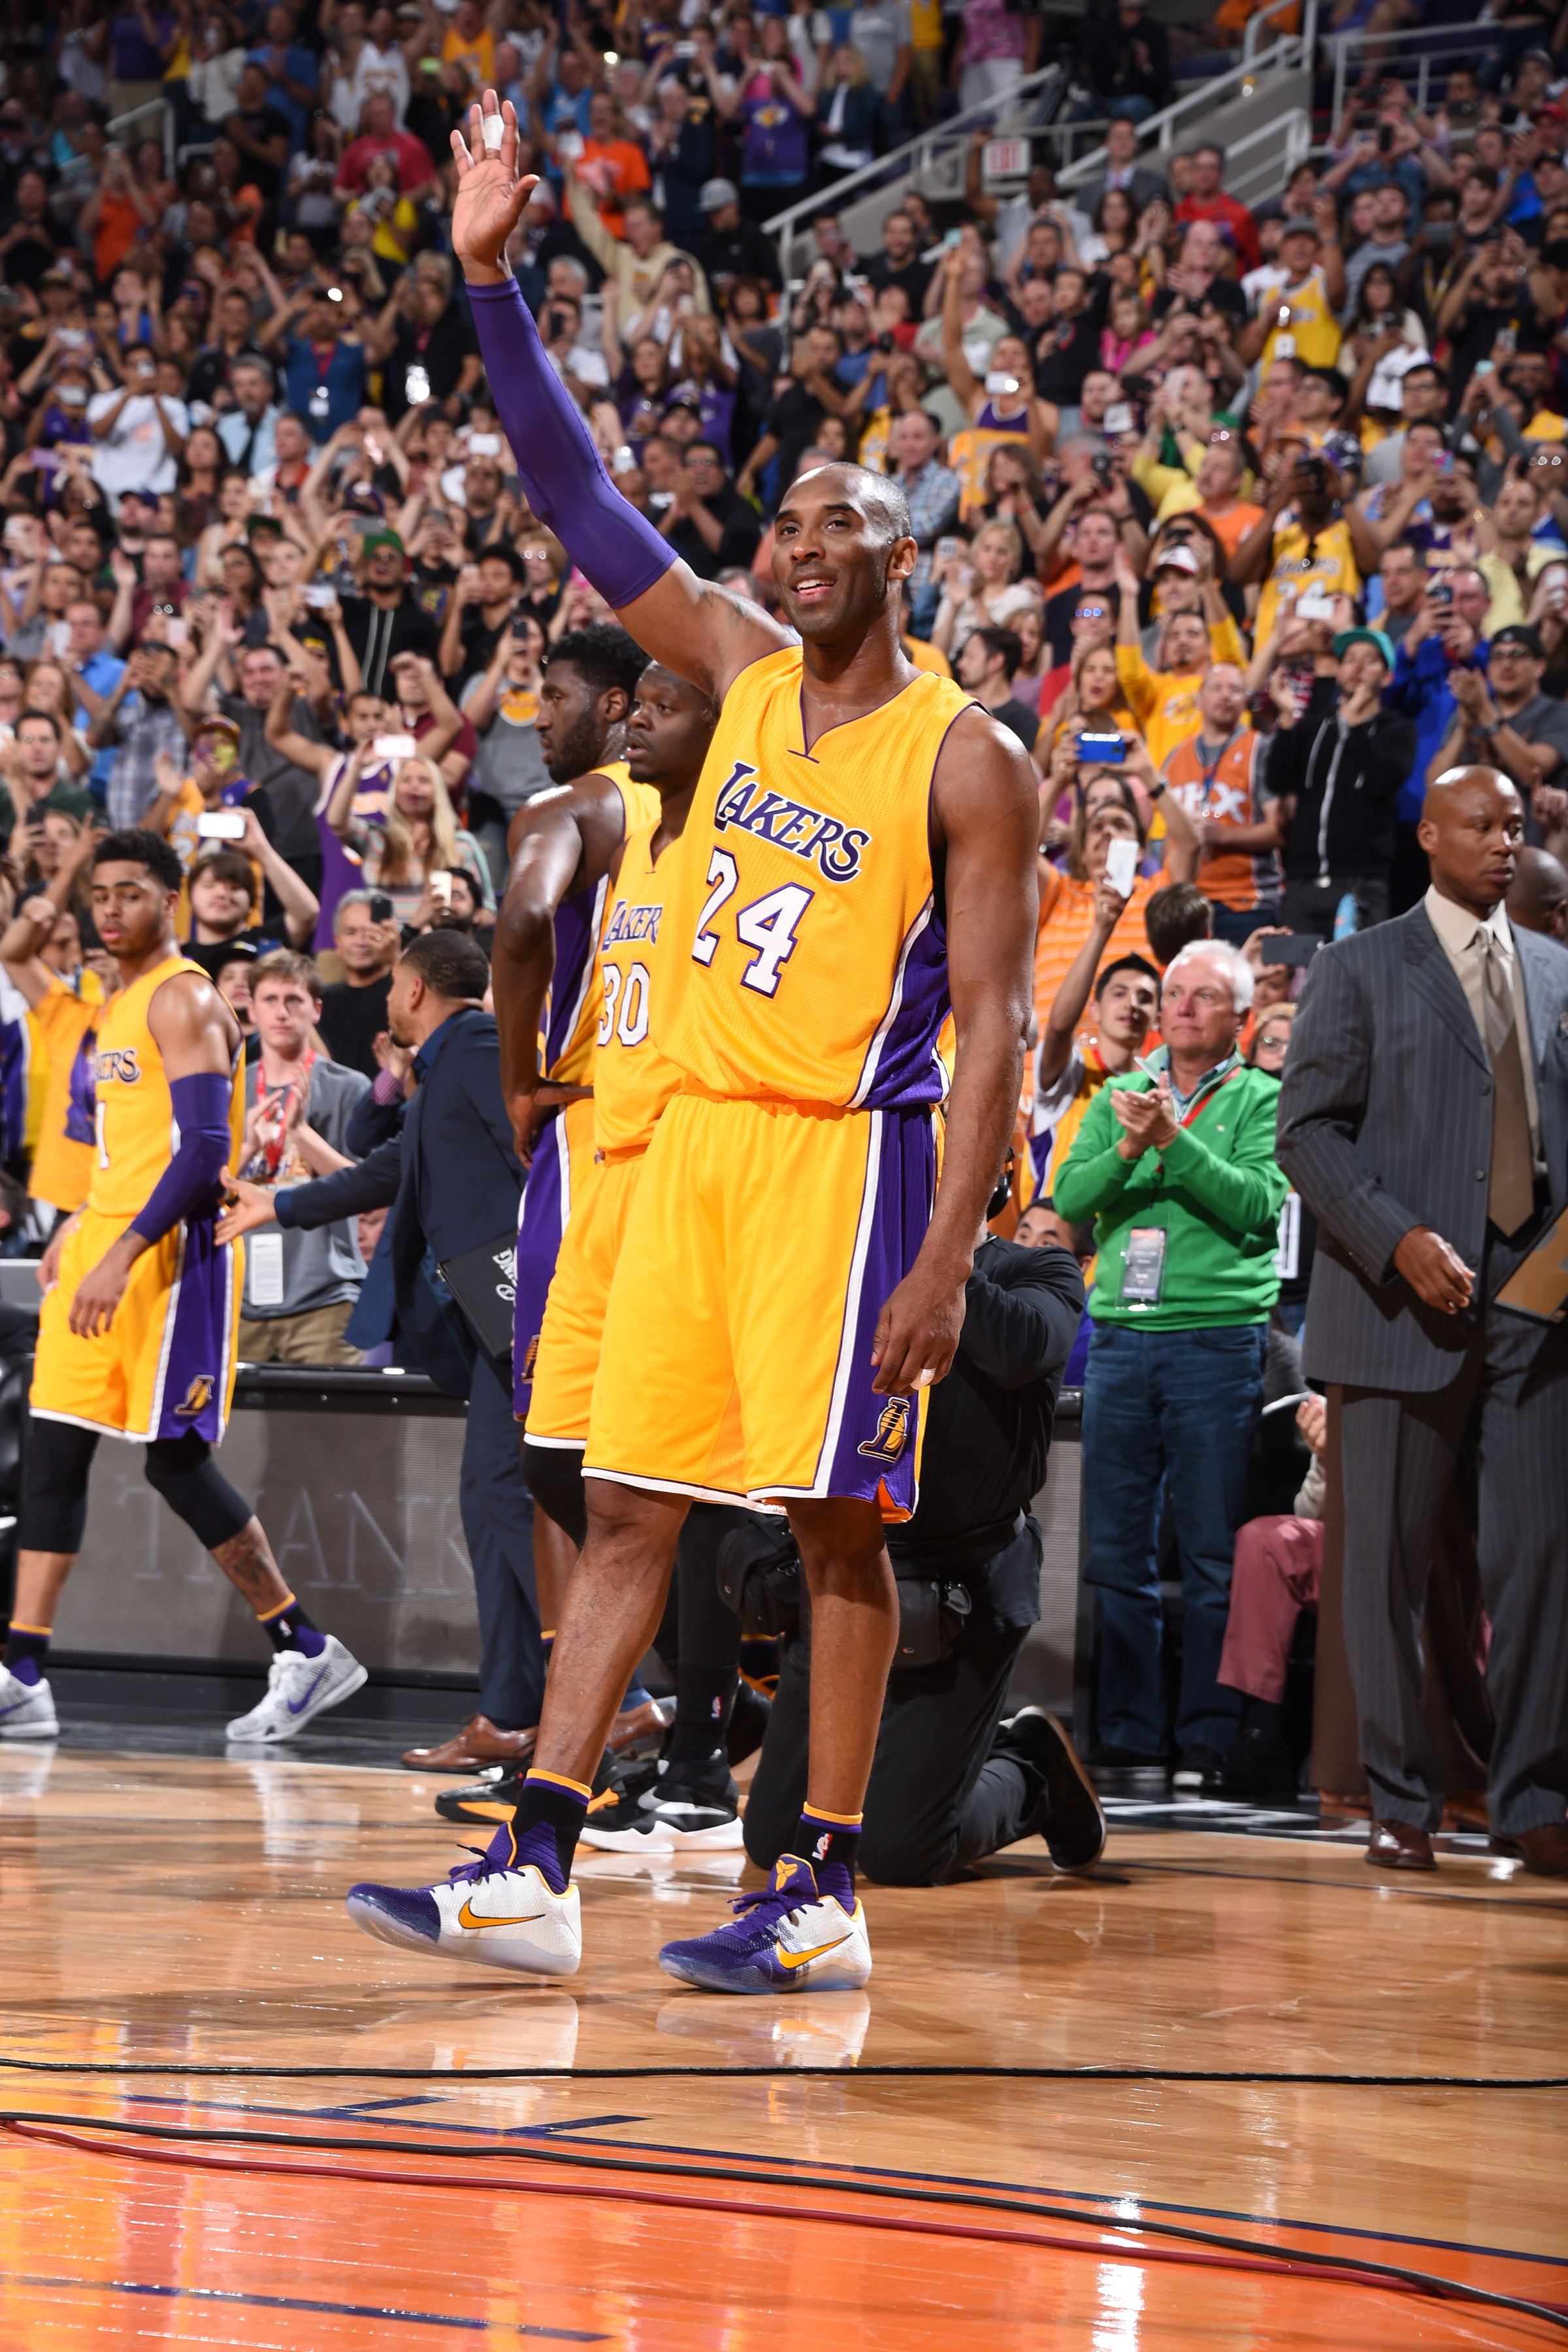 MAMBA DAY: 24 Photos To Celebrate Kobe Bryant’s Legacy